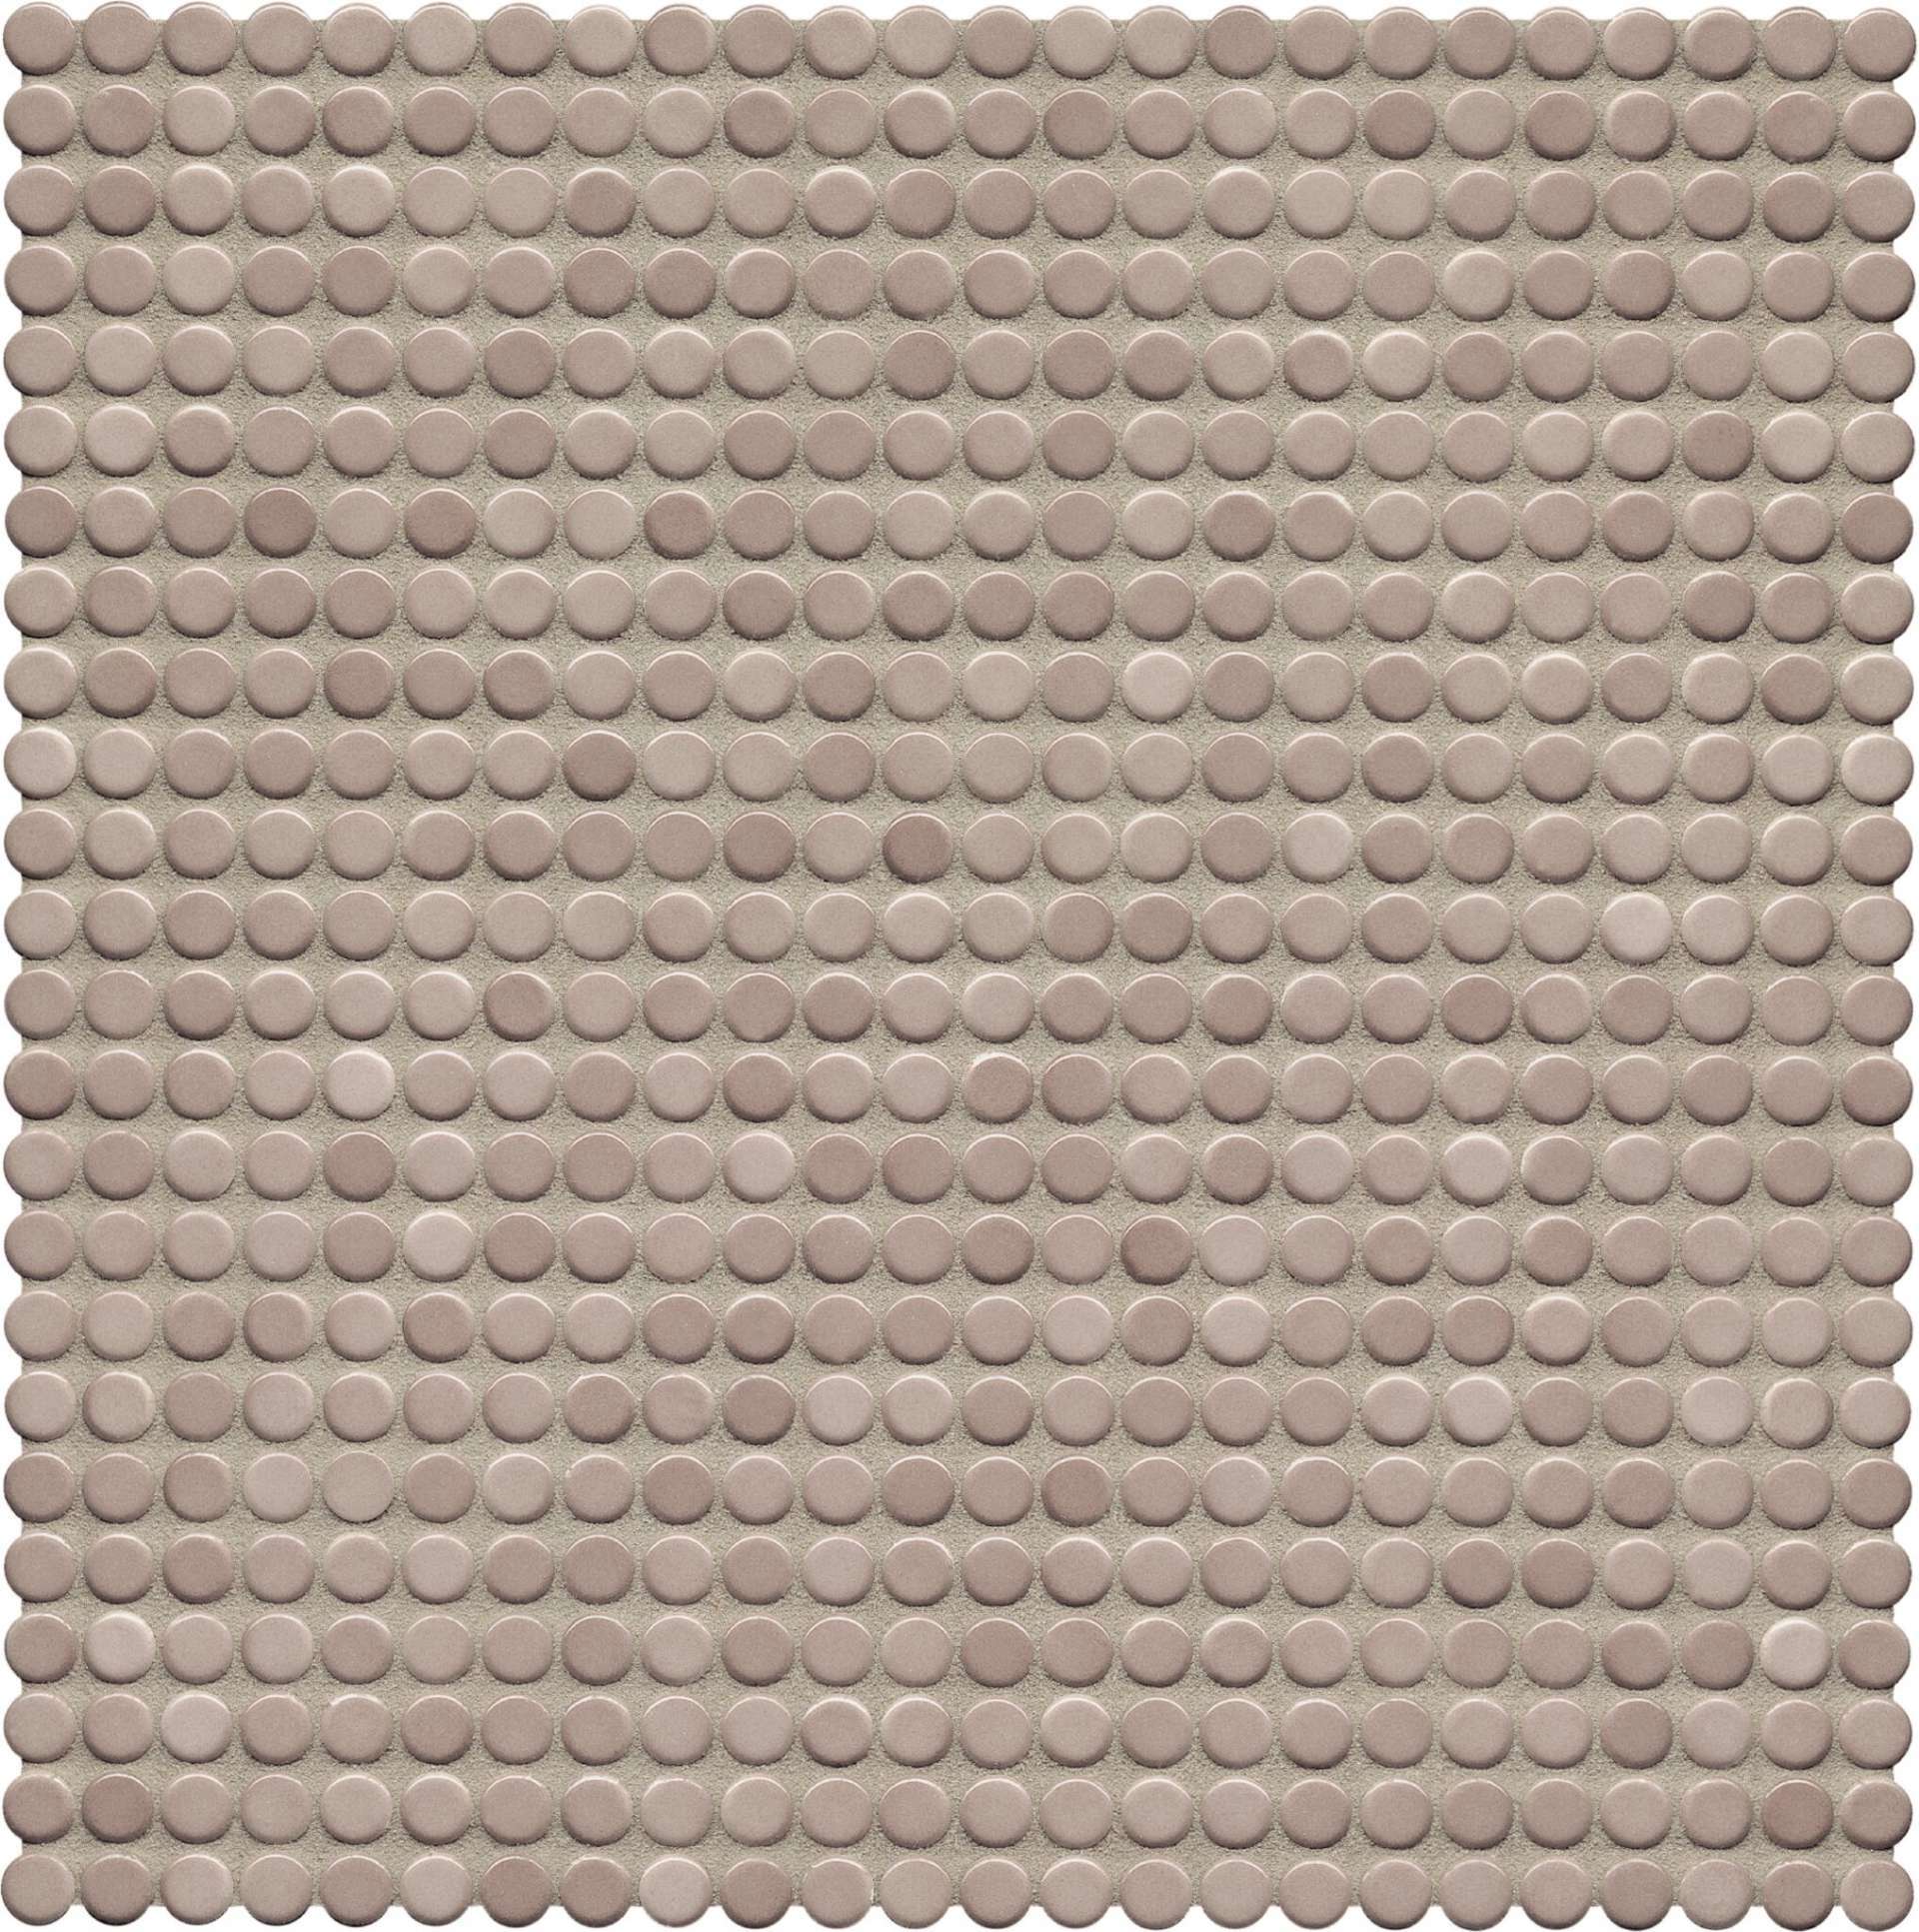 Мозаика Jasba Loop Elfenbein 40003H-44, цвет бежевый, поверхность глянцевая, круг и овал, 316x316